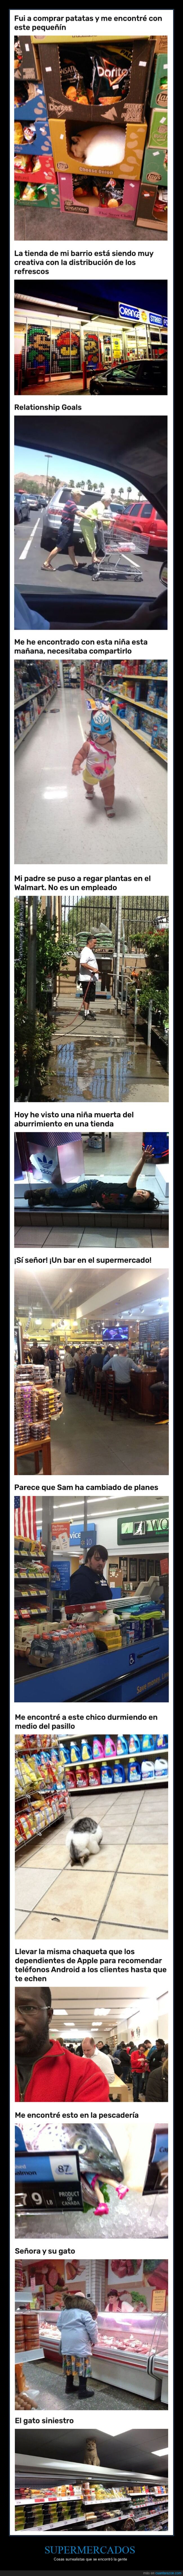 supermercados,wtf